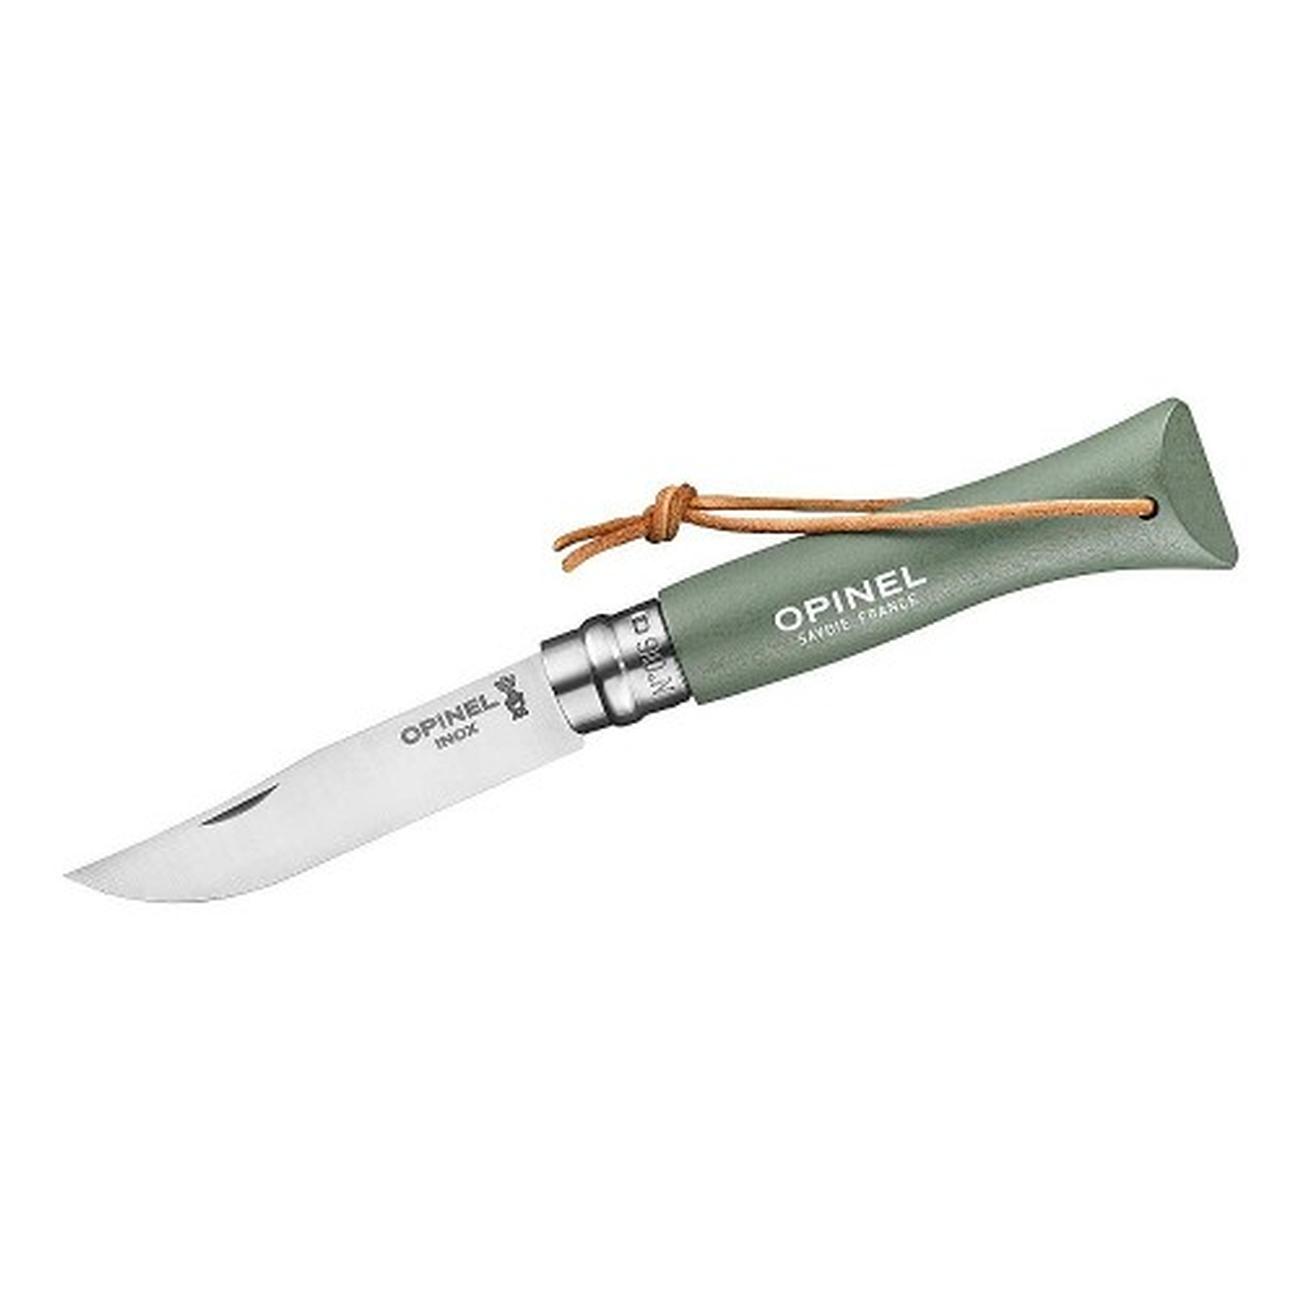 opinel-n06-trekking-folding-knife-colorama-sage - Opinel N06 Trekking Pocket Knife Sage